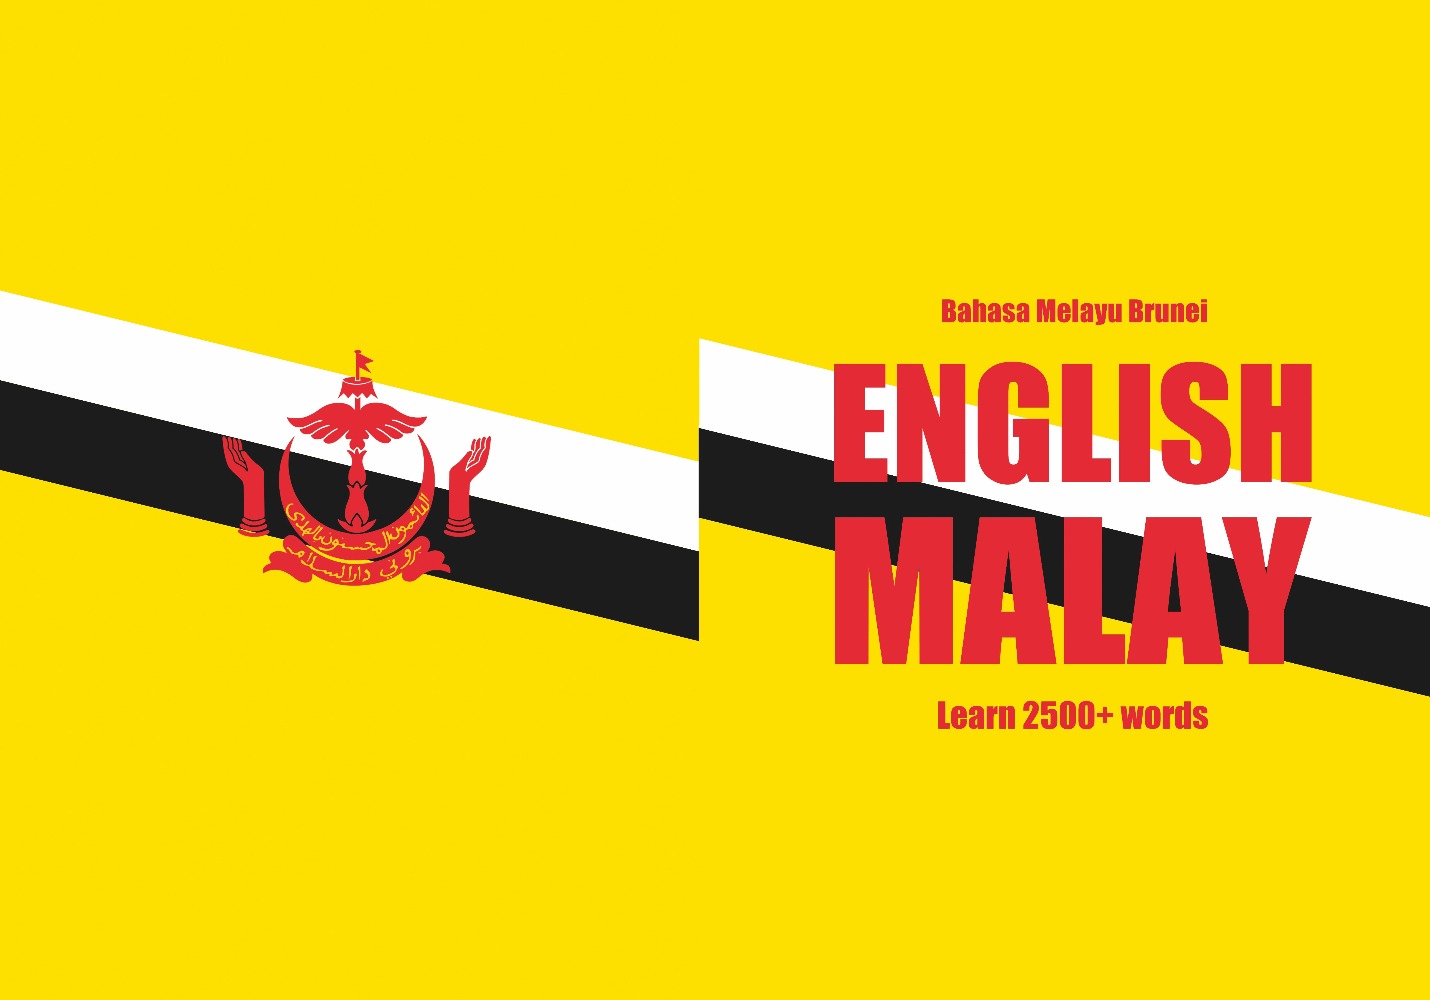 Brunei Malay language notebook cover